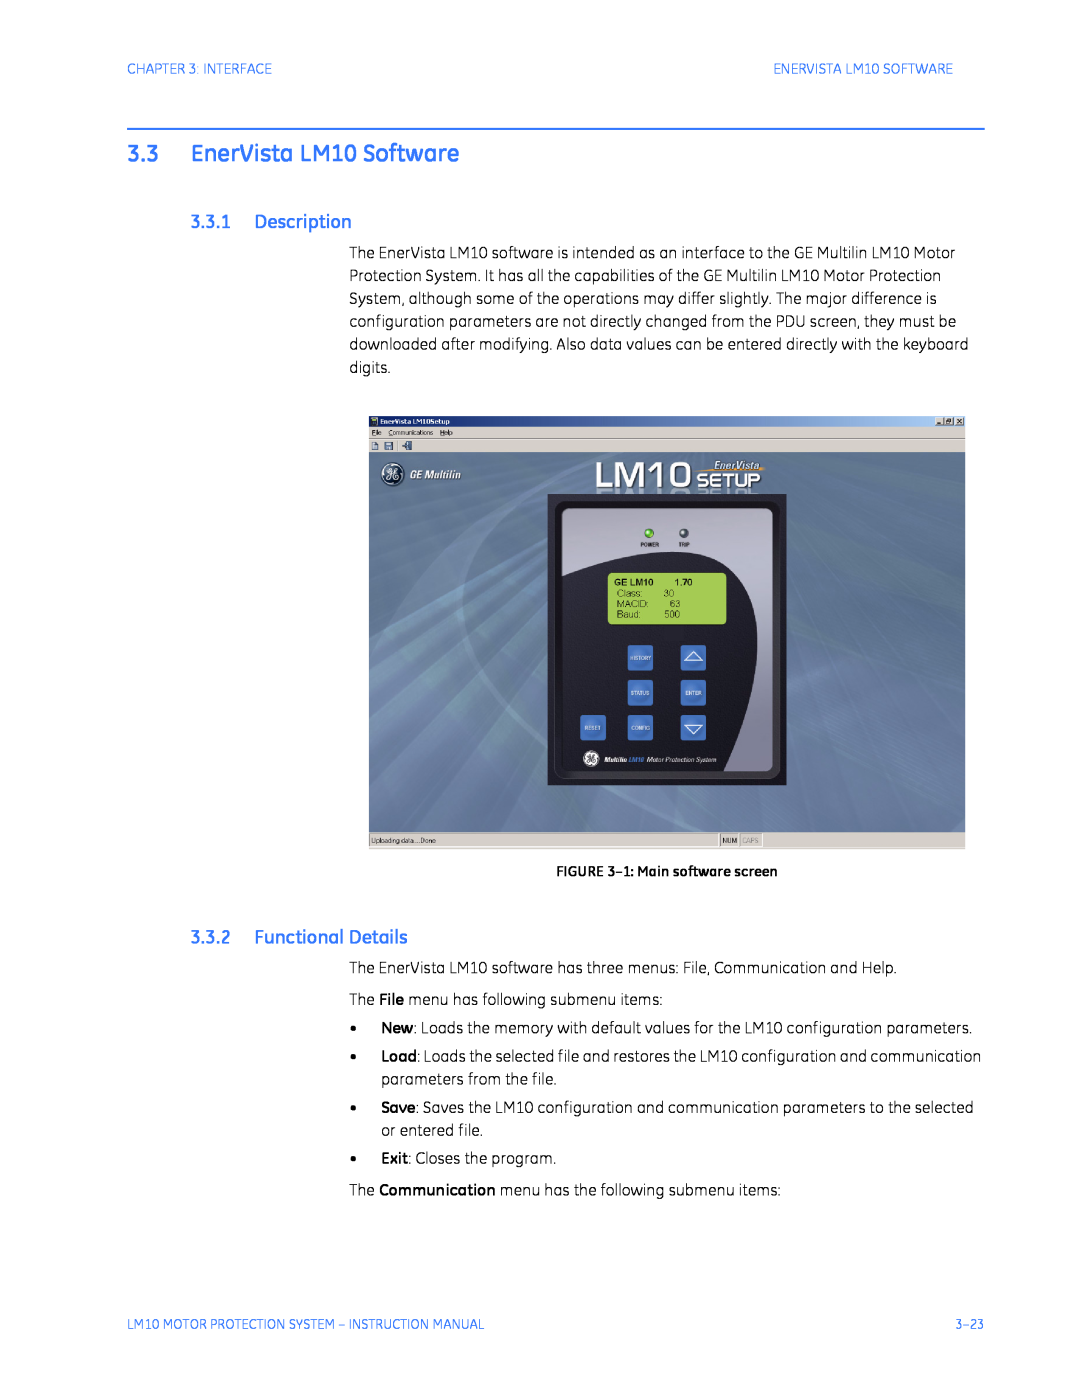 GE Motor Protection System instruction manual EnerVista LM10 Software, Description, Functional Details 